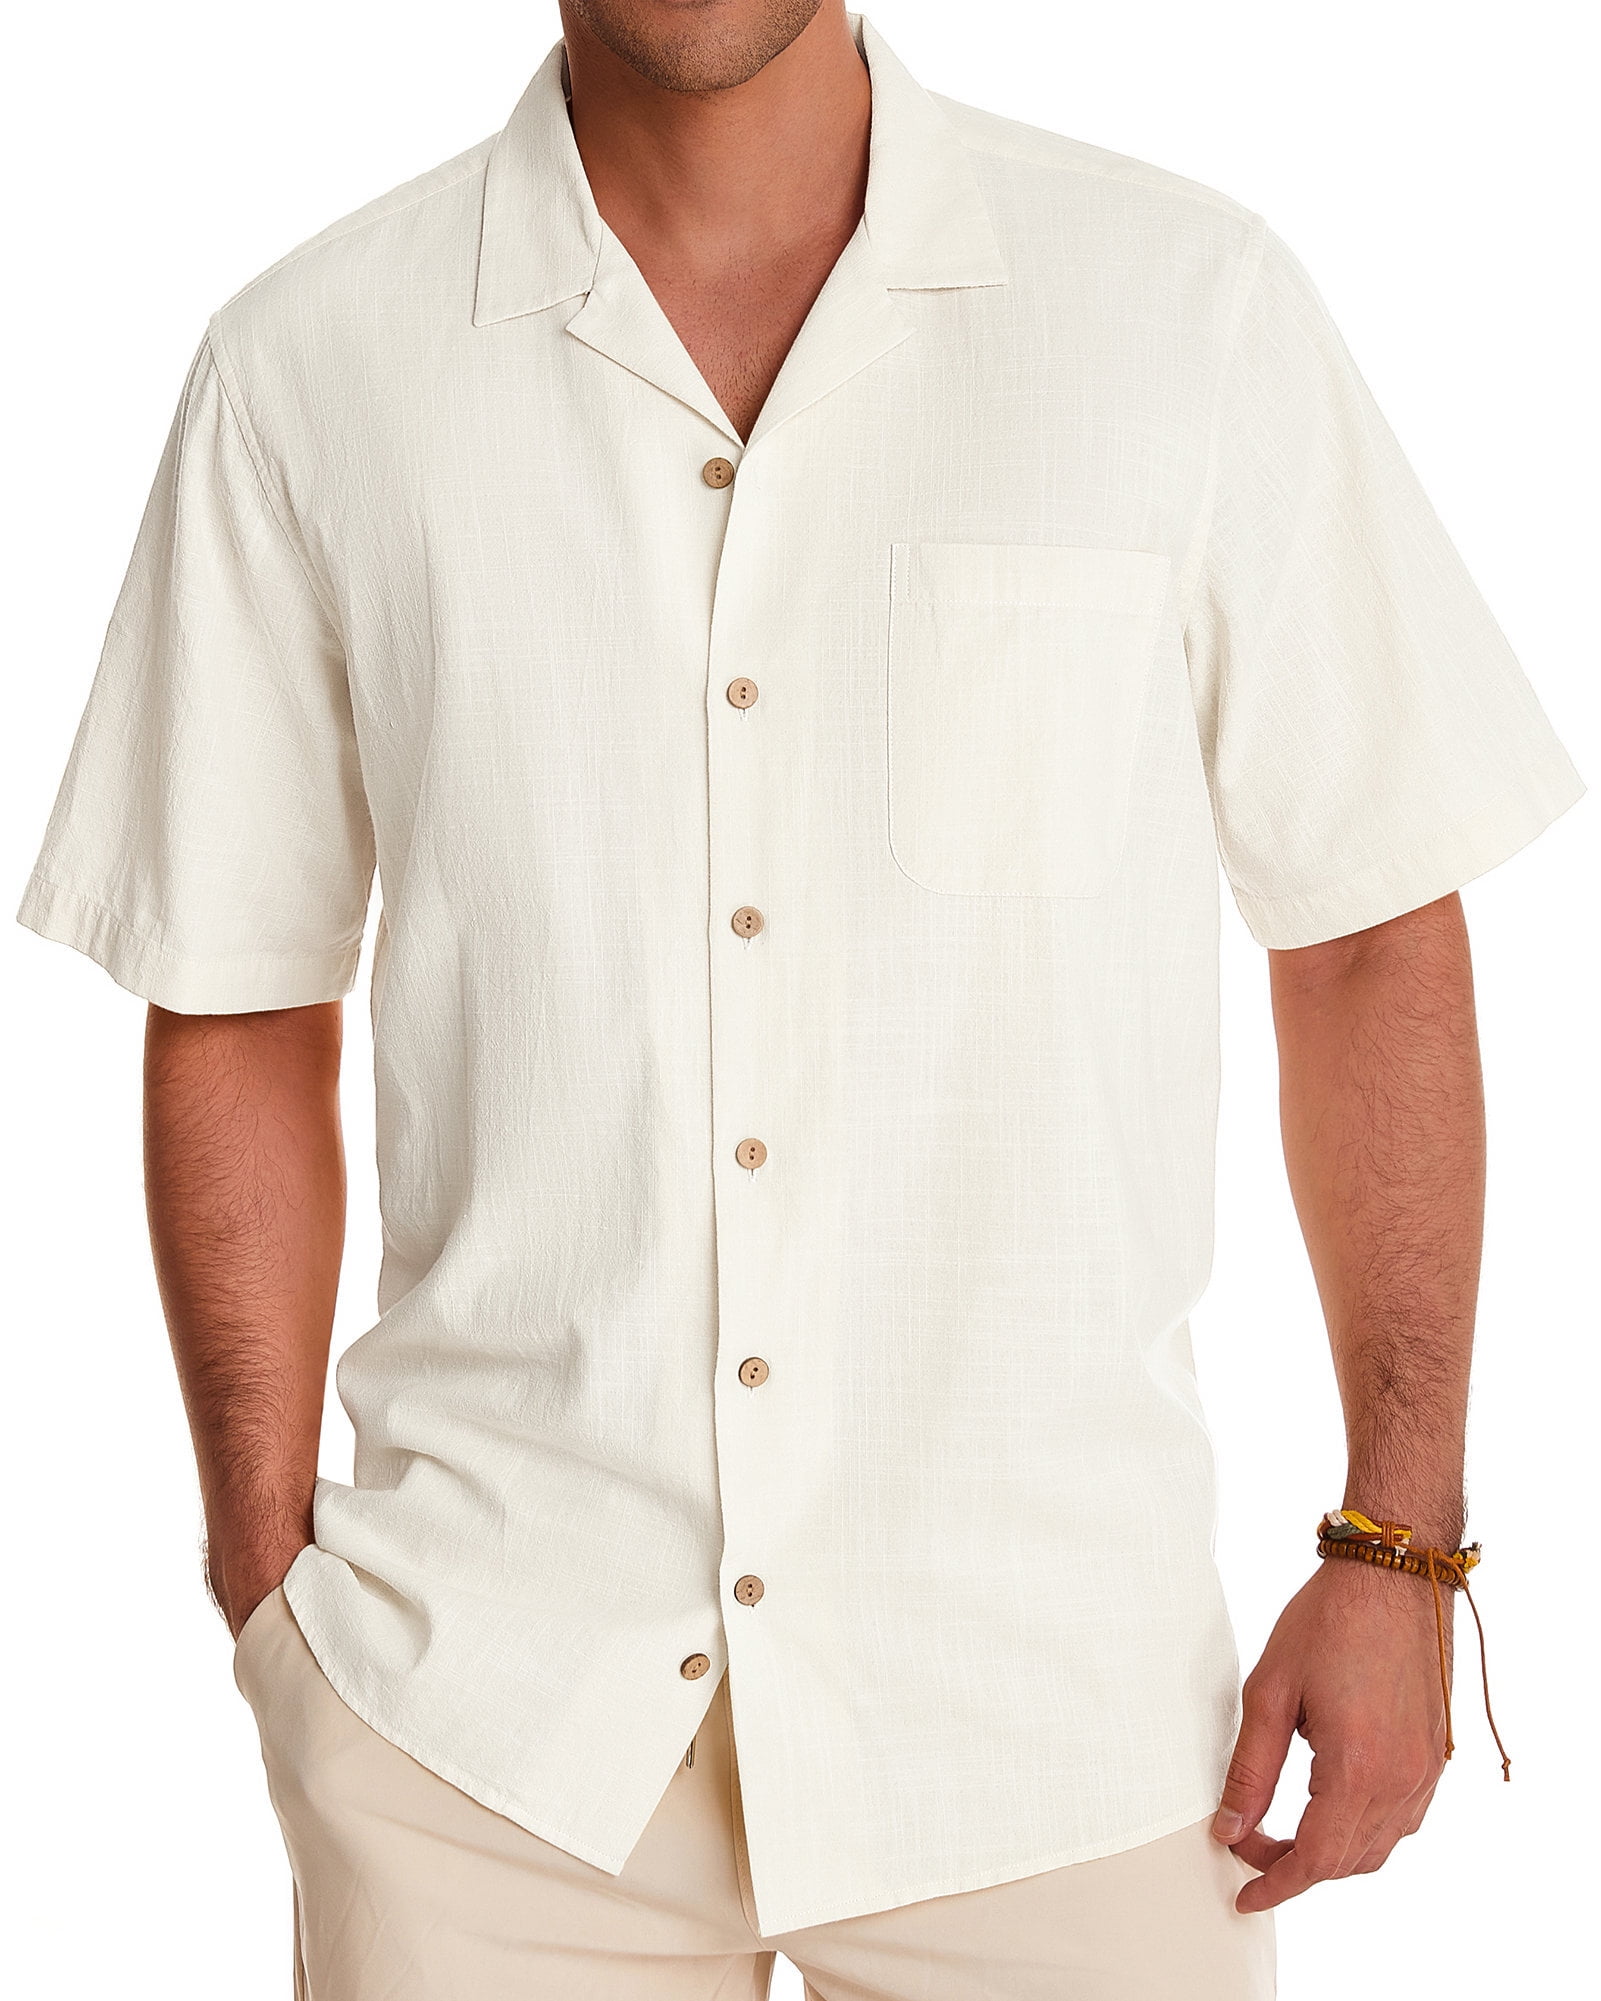 XMMSWDLA Mens Linen Shirts Short Sleeve Button UP Casual Lightweight Shirt  Stylish Beach Tops Black Gym Shirts Men 